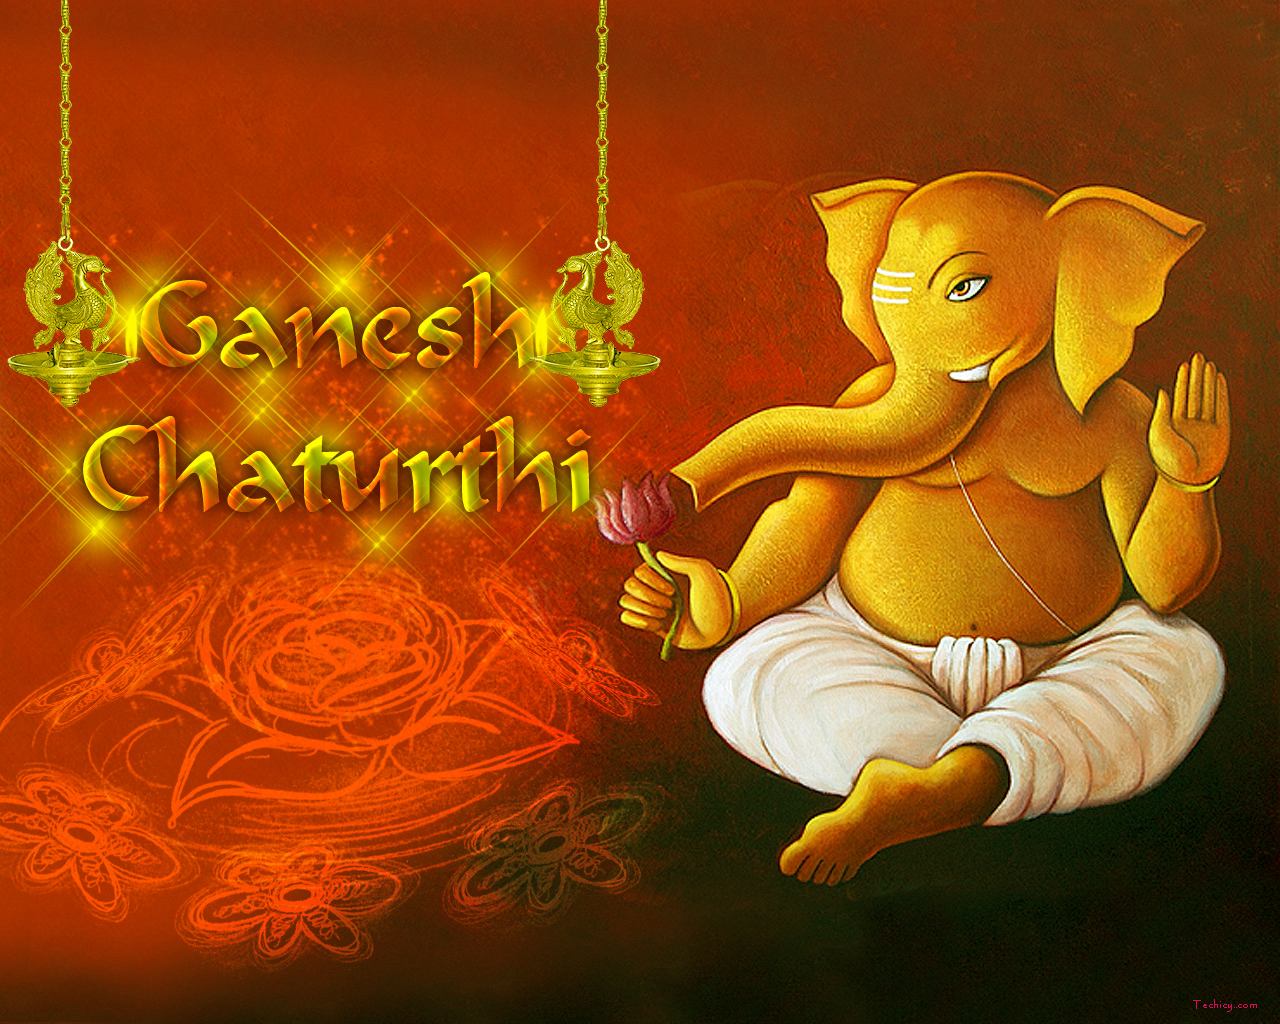 Ganesh Chaturthi HD Image, Wallpaper, Pics, and Photo (Free Download)